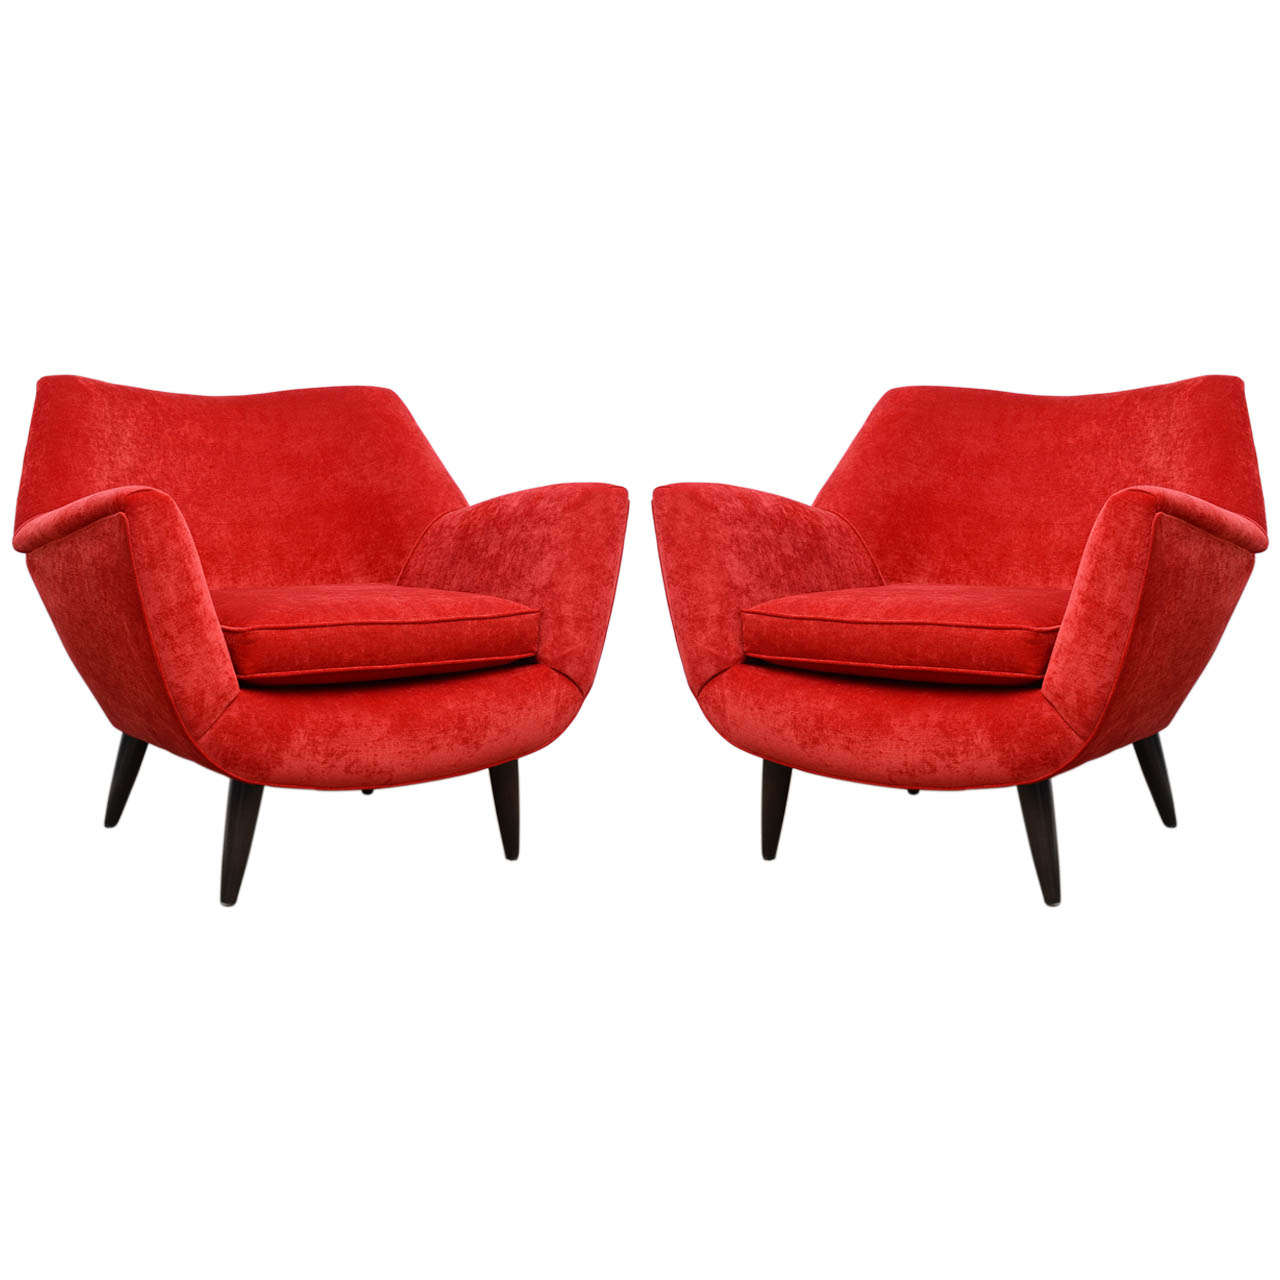 Pair of Italian Chic Mid Century Modern Lounge Chairs Ponti Parisi Style